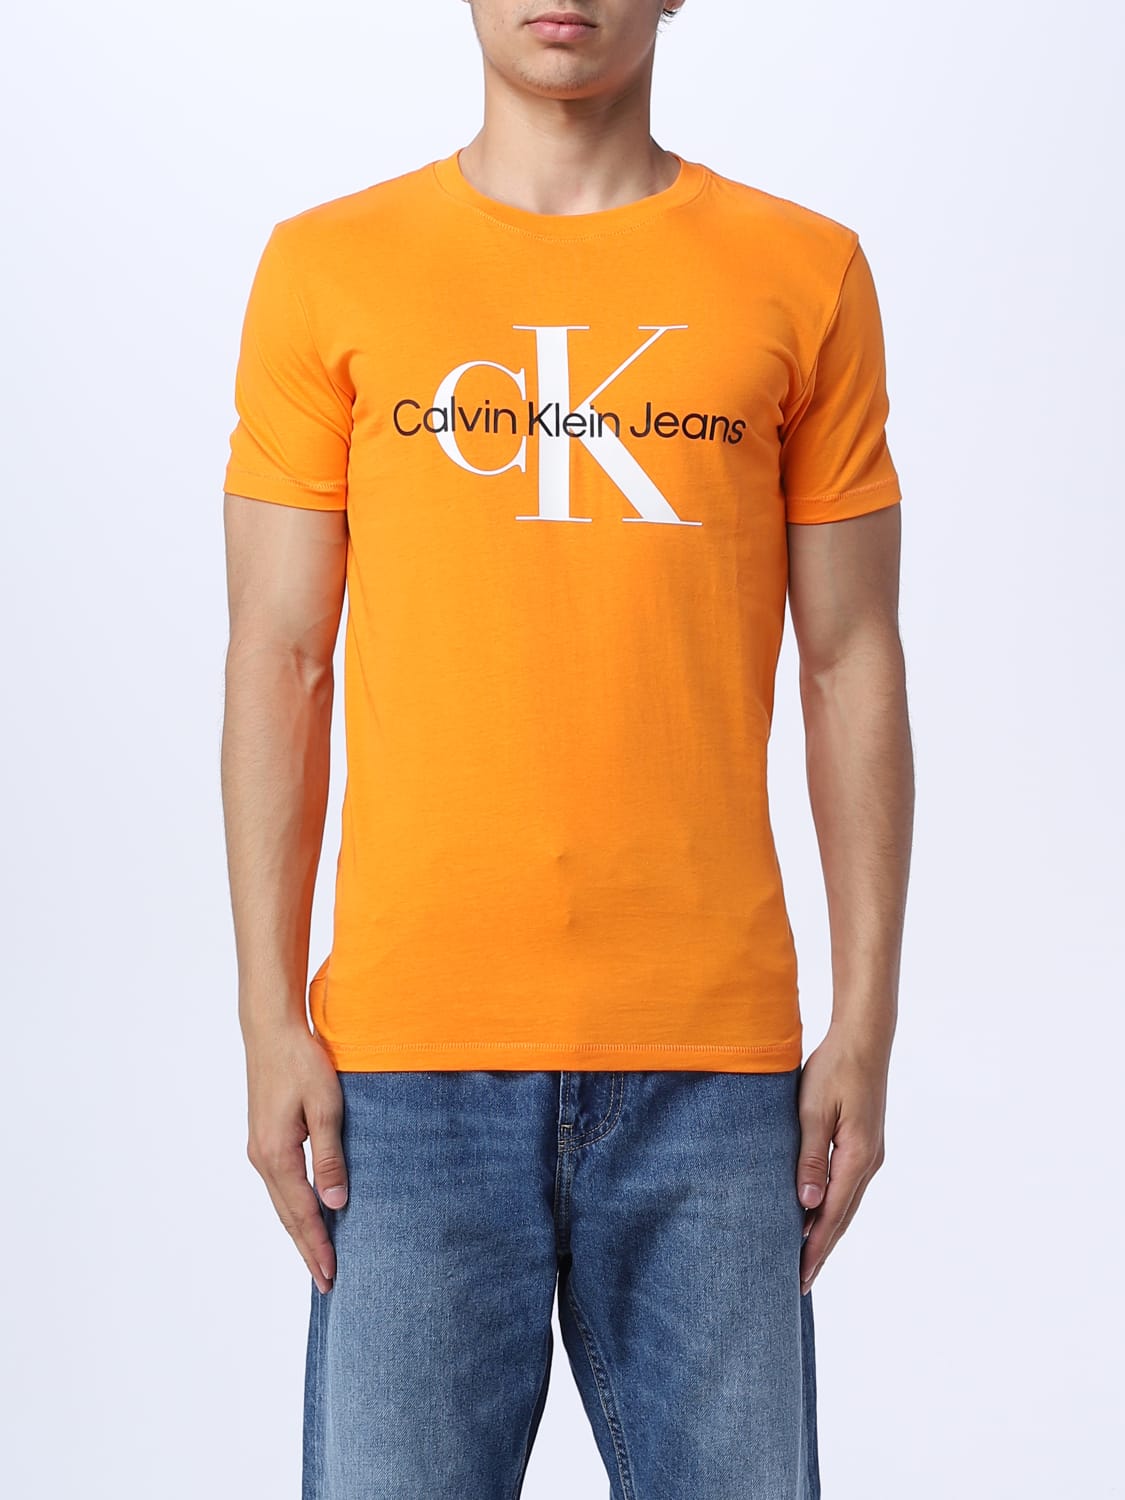 CALVIN KLEIN JEANS: t-shirt for man - Orange | Calvin Klein Jeans t-shirt  J30J320806 online at